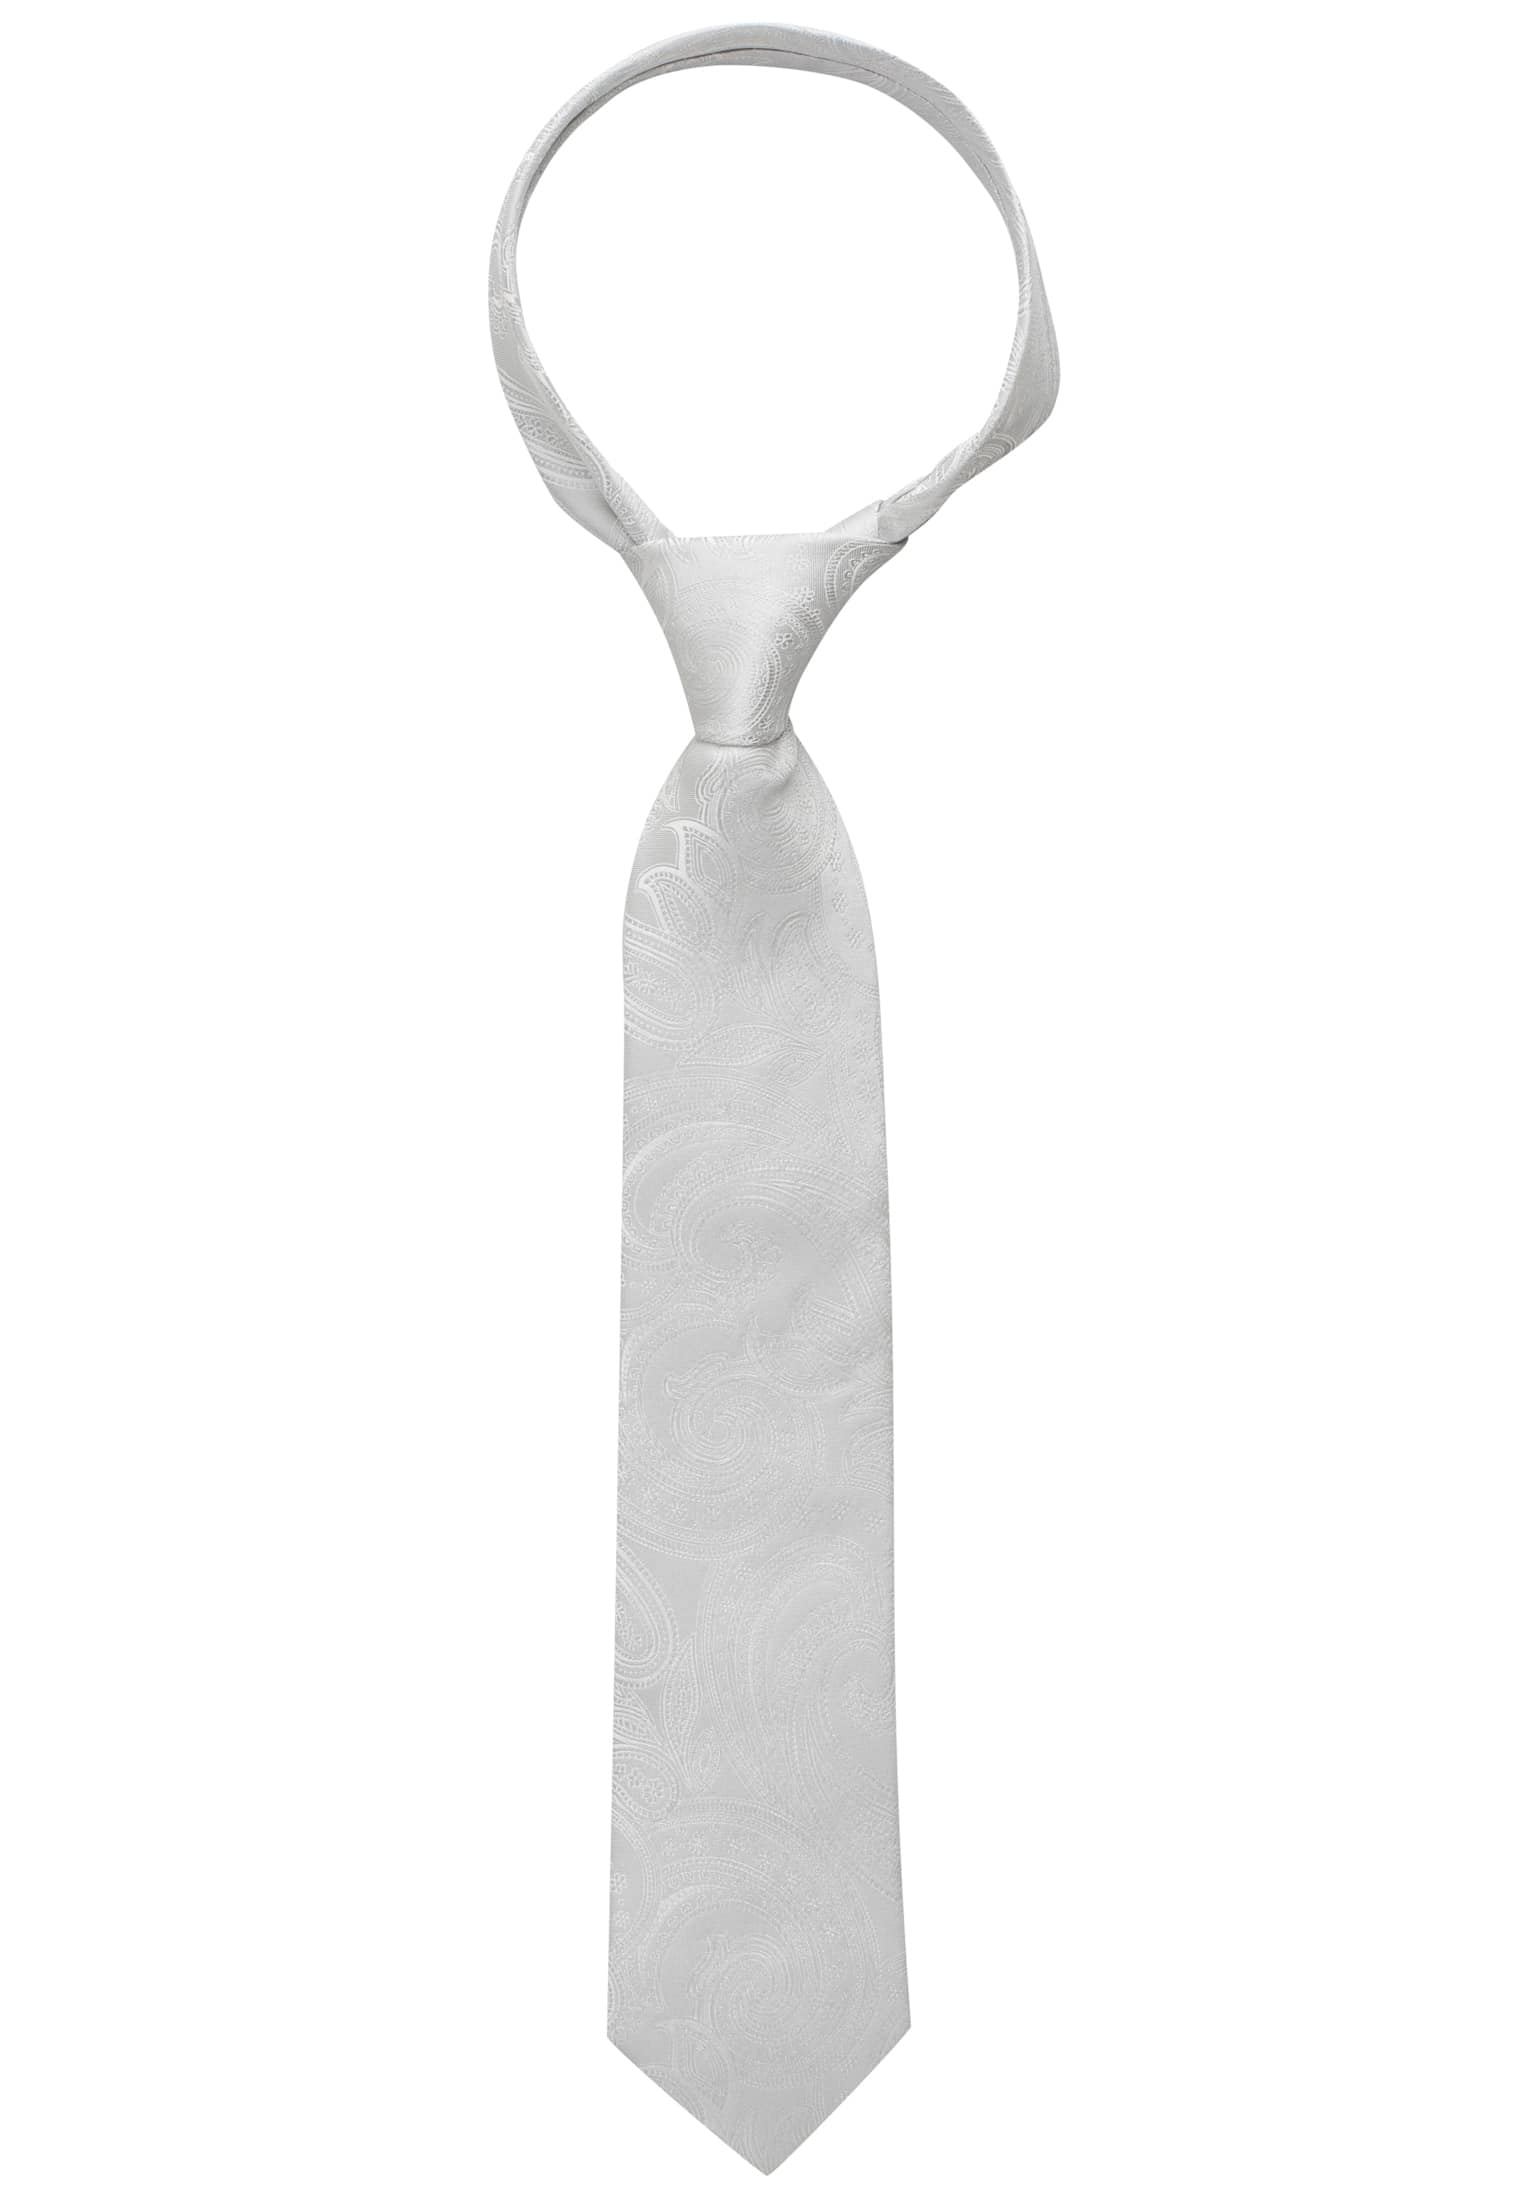 Krawatte in silber gemustert 1AC01867-03-11-160 silber | 160 | 